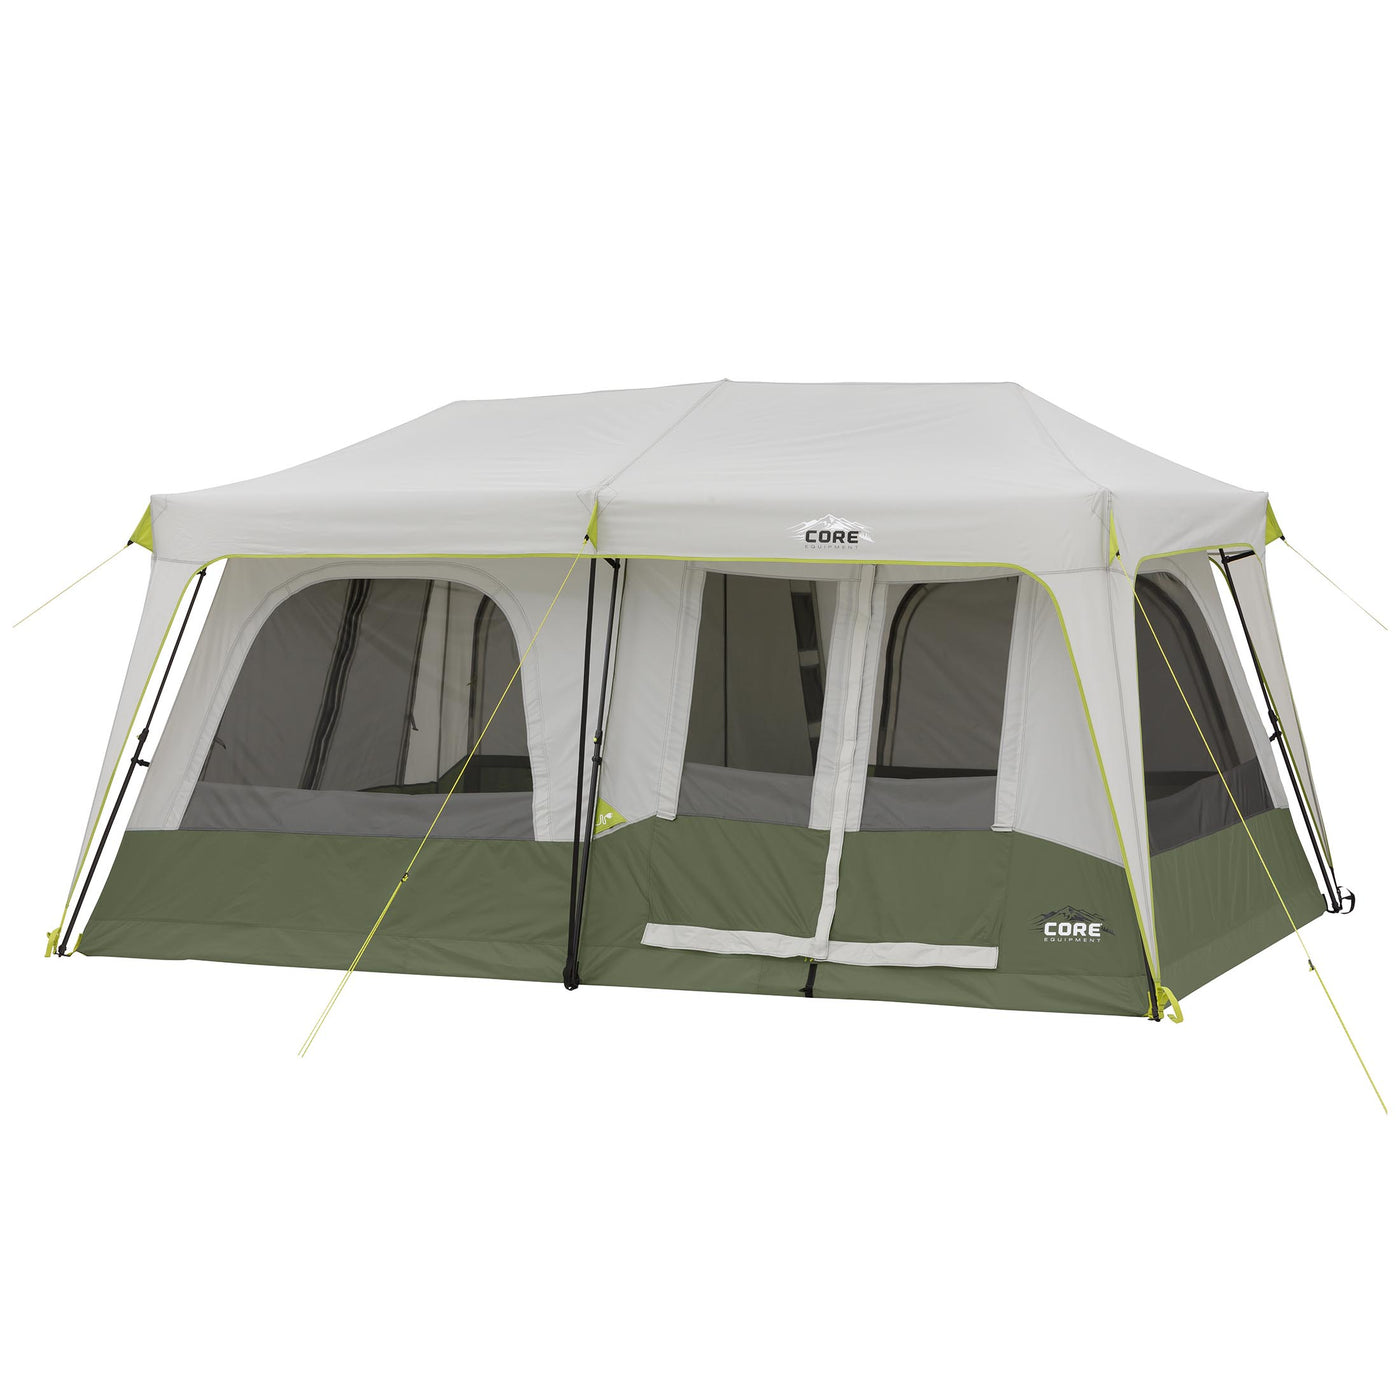 NTK Flash 8 Person Instant Cabin Tent 13' x 9' - Waterproof Tent